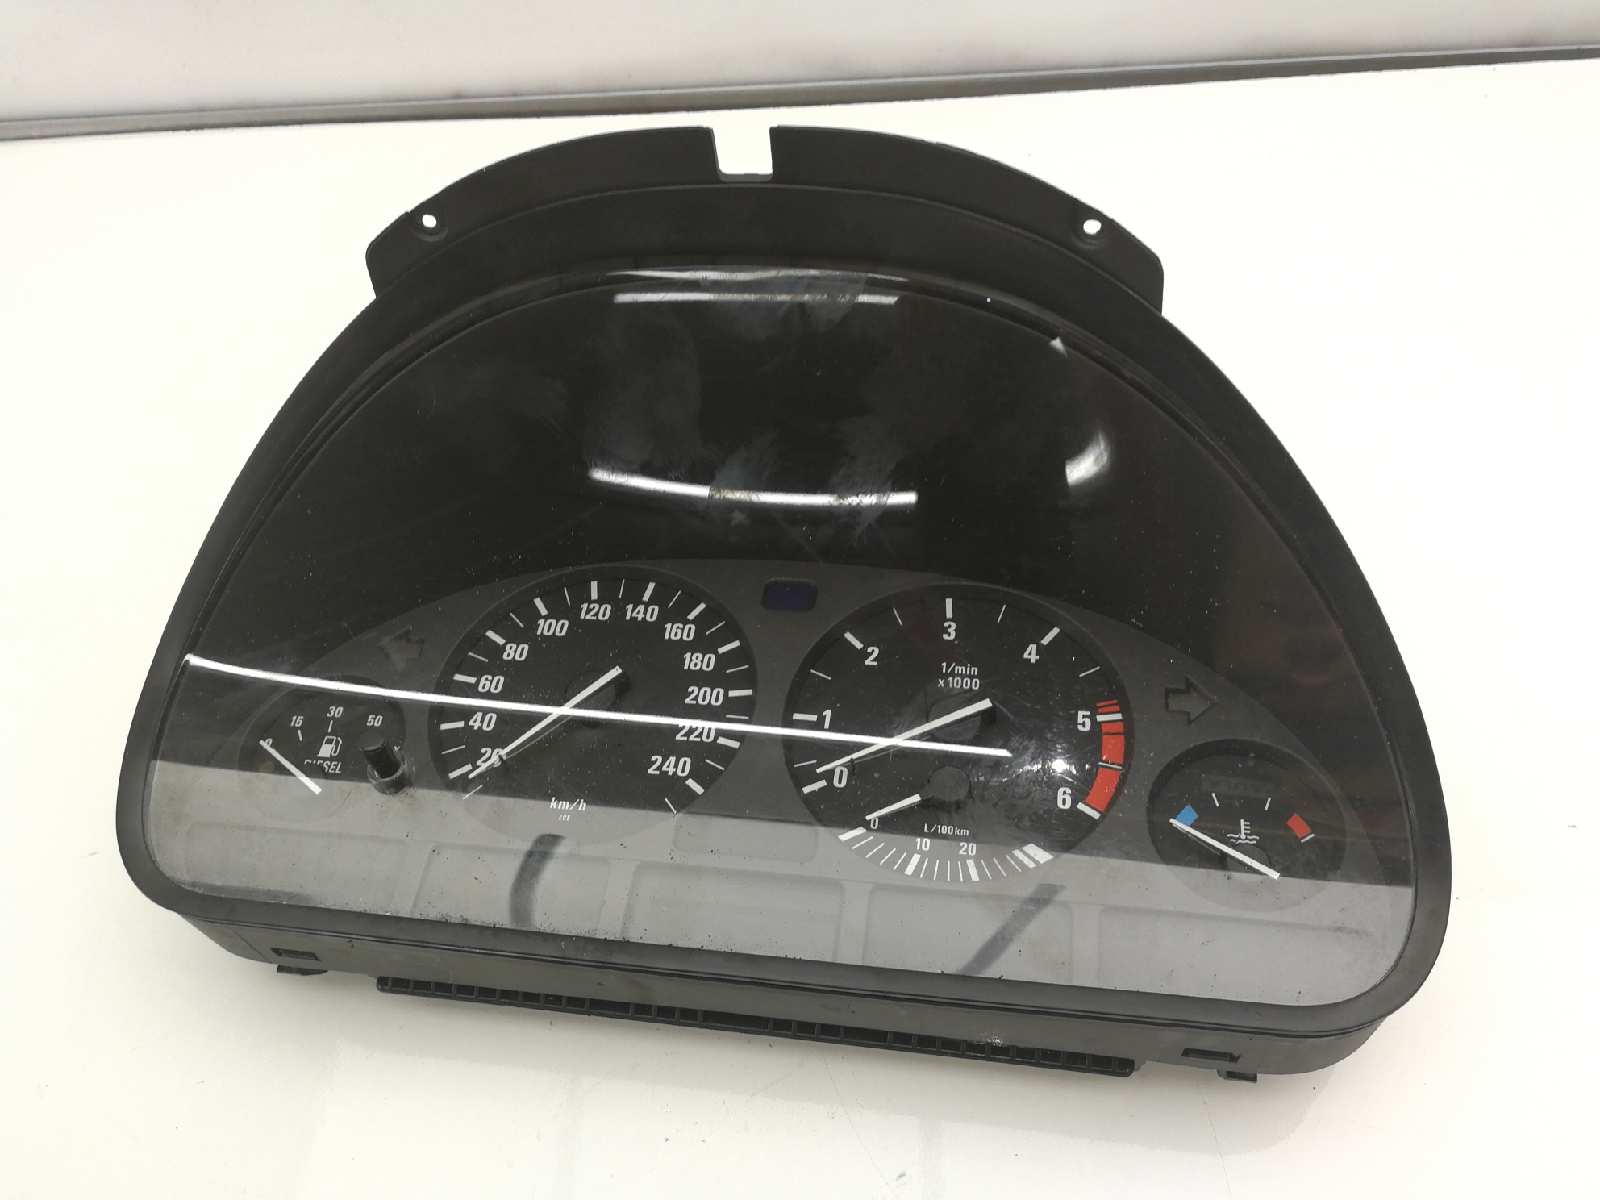 BMW 5 Series E39 (1995-2004) Speedometer 62118375675, 110008735034, 87001313 24879388